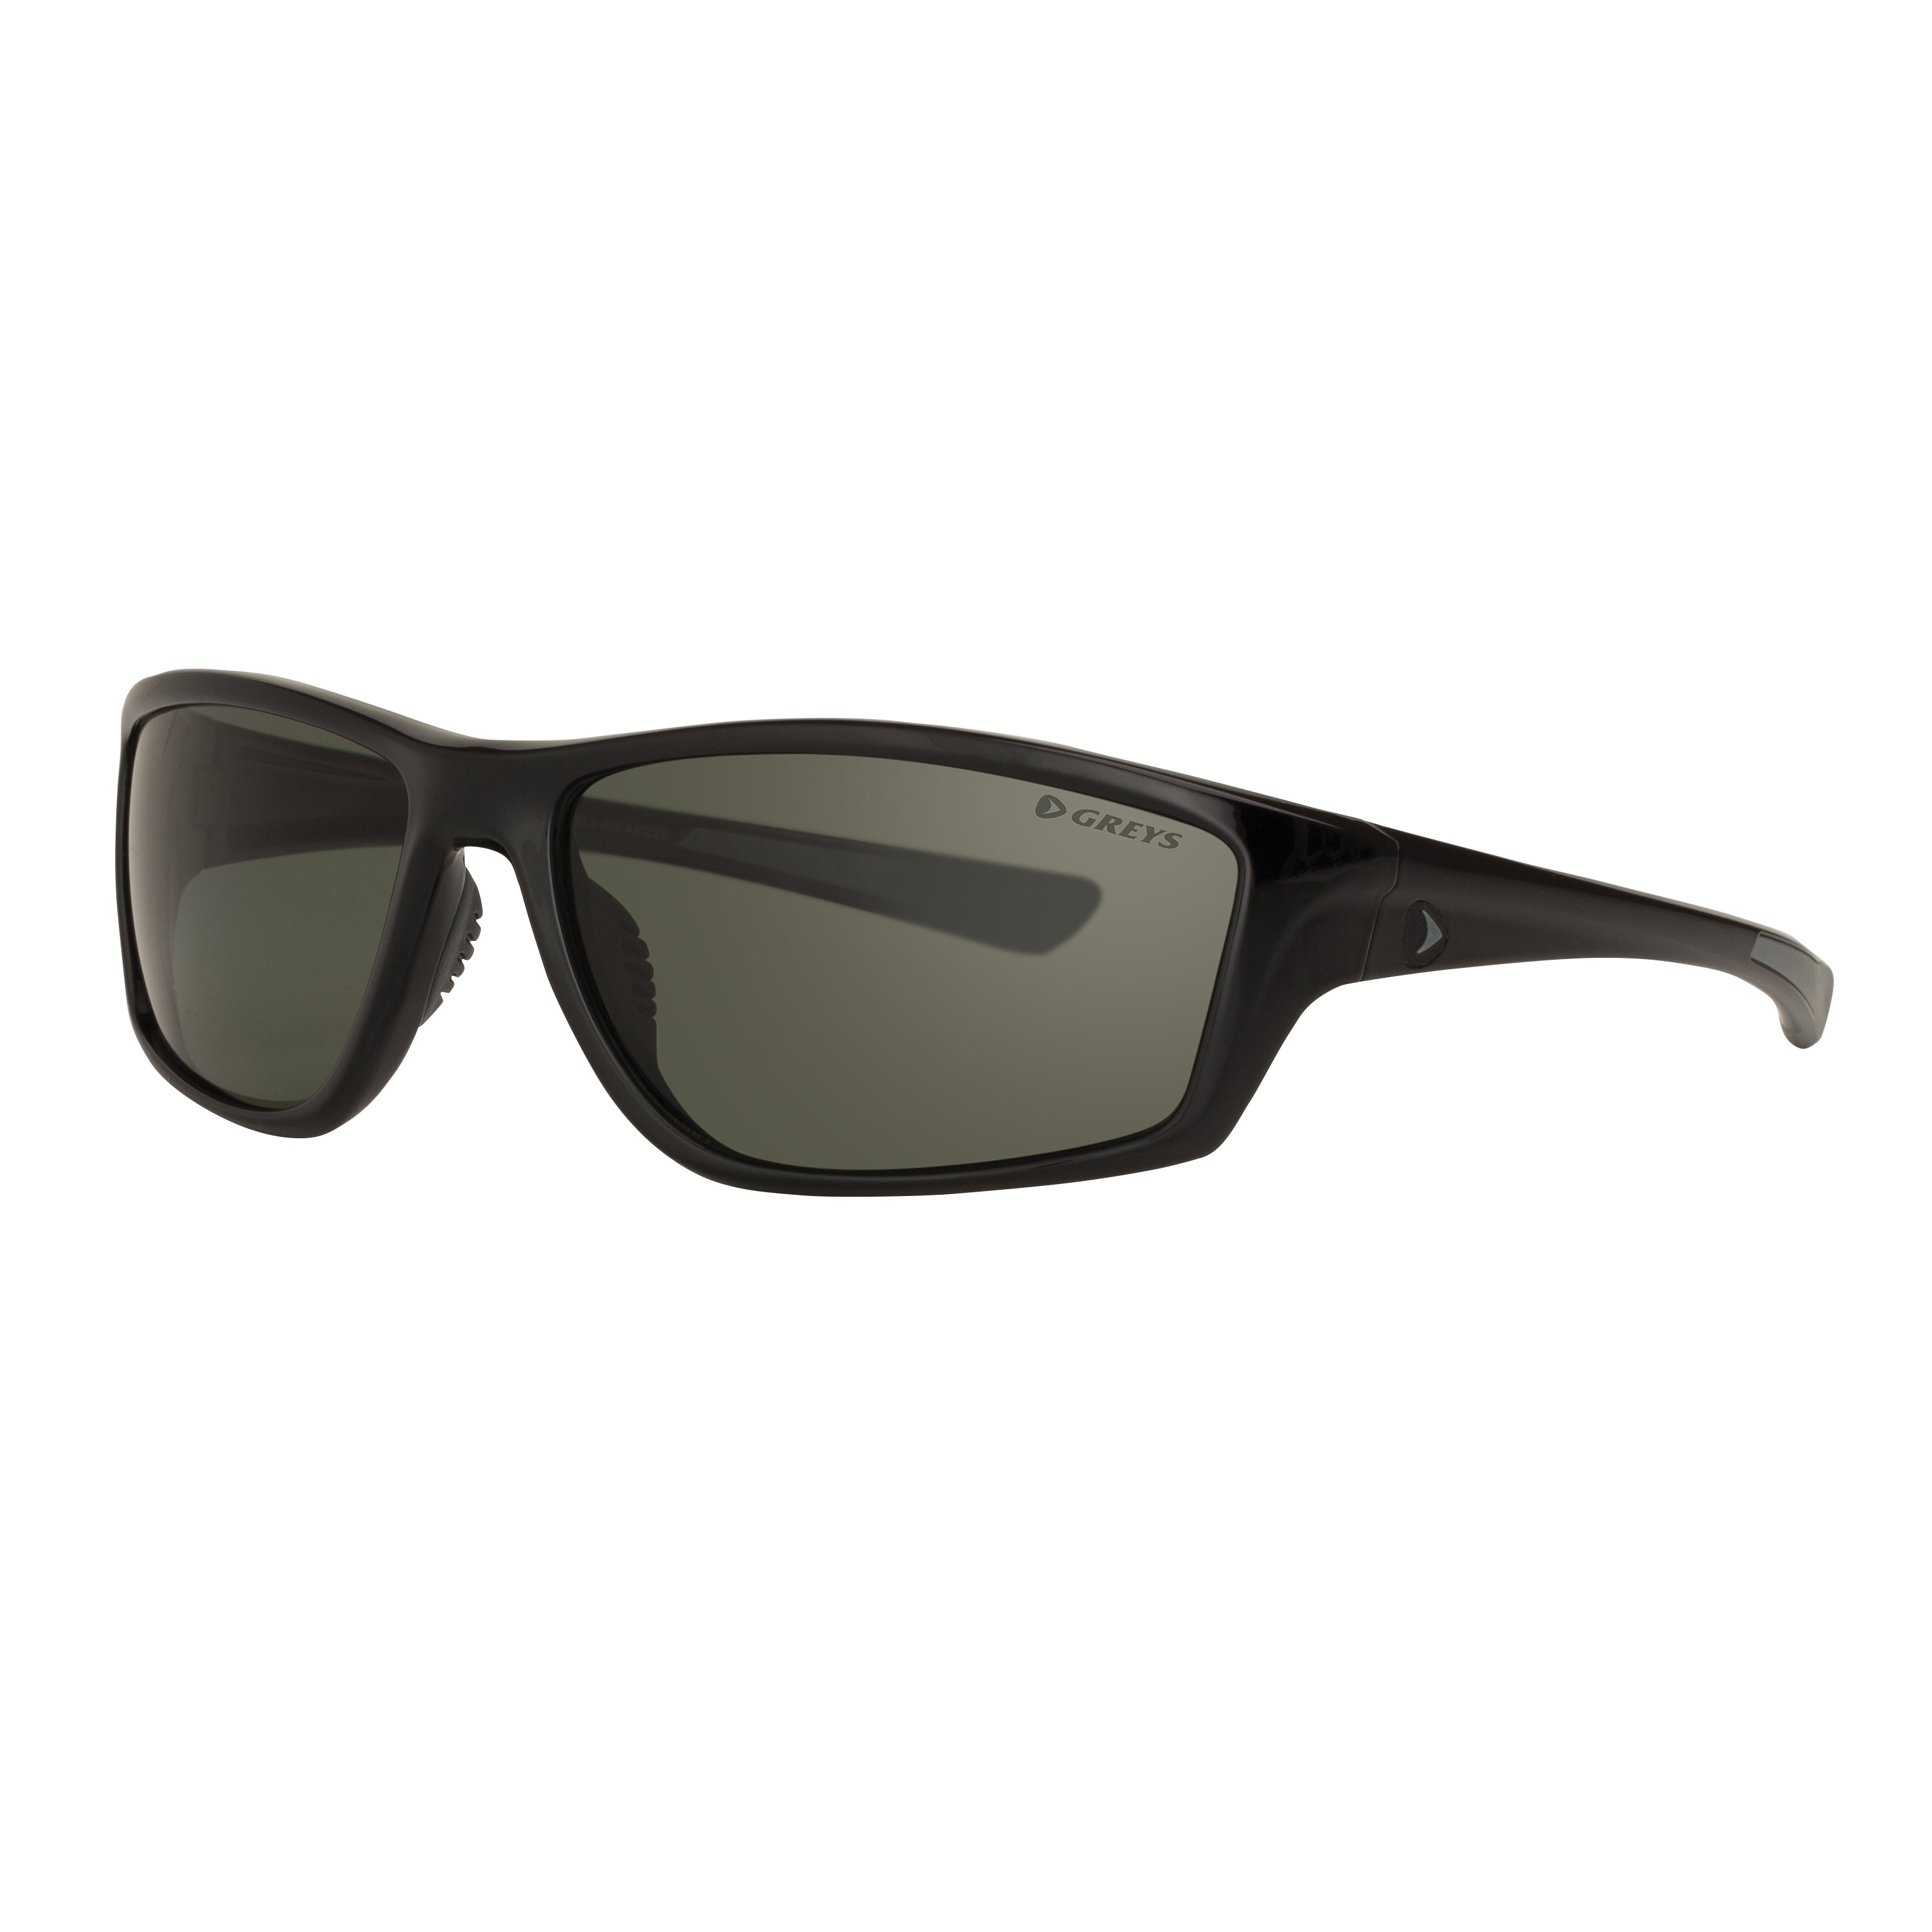 Greys - G3 Polarised Sunglasses